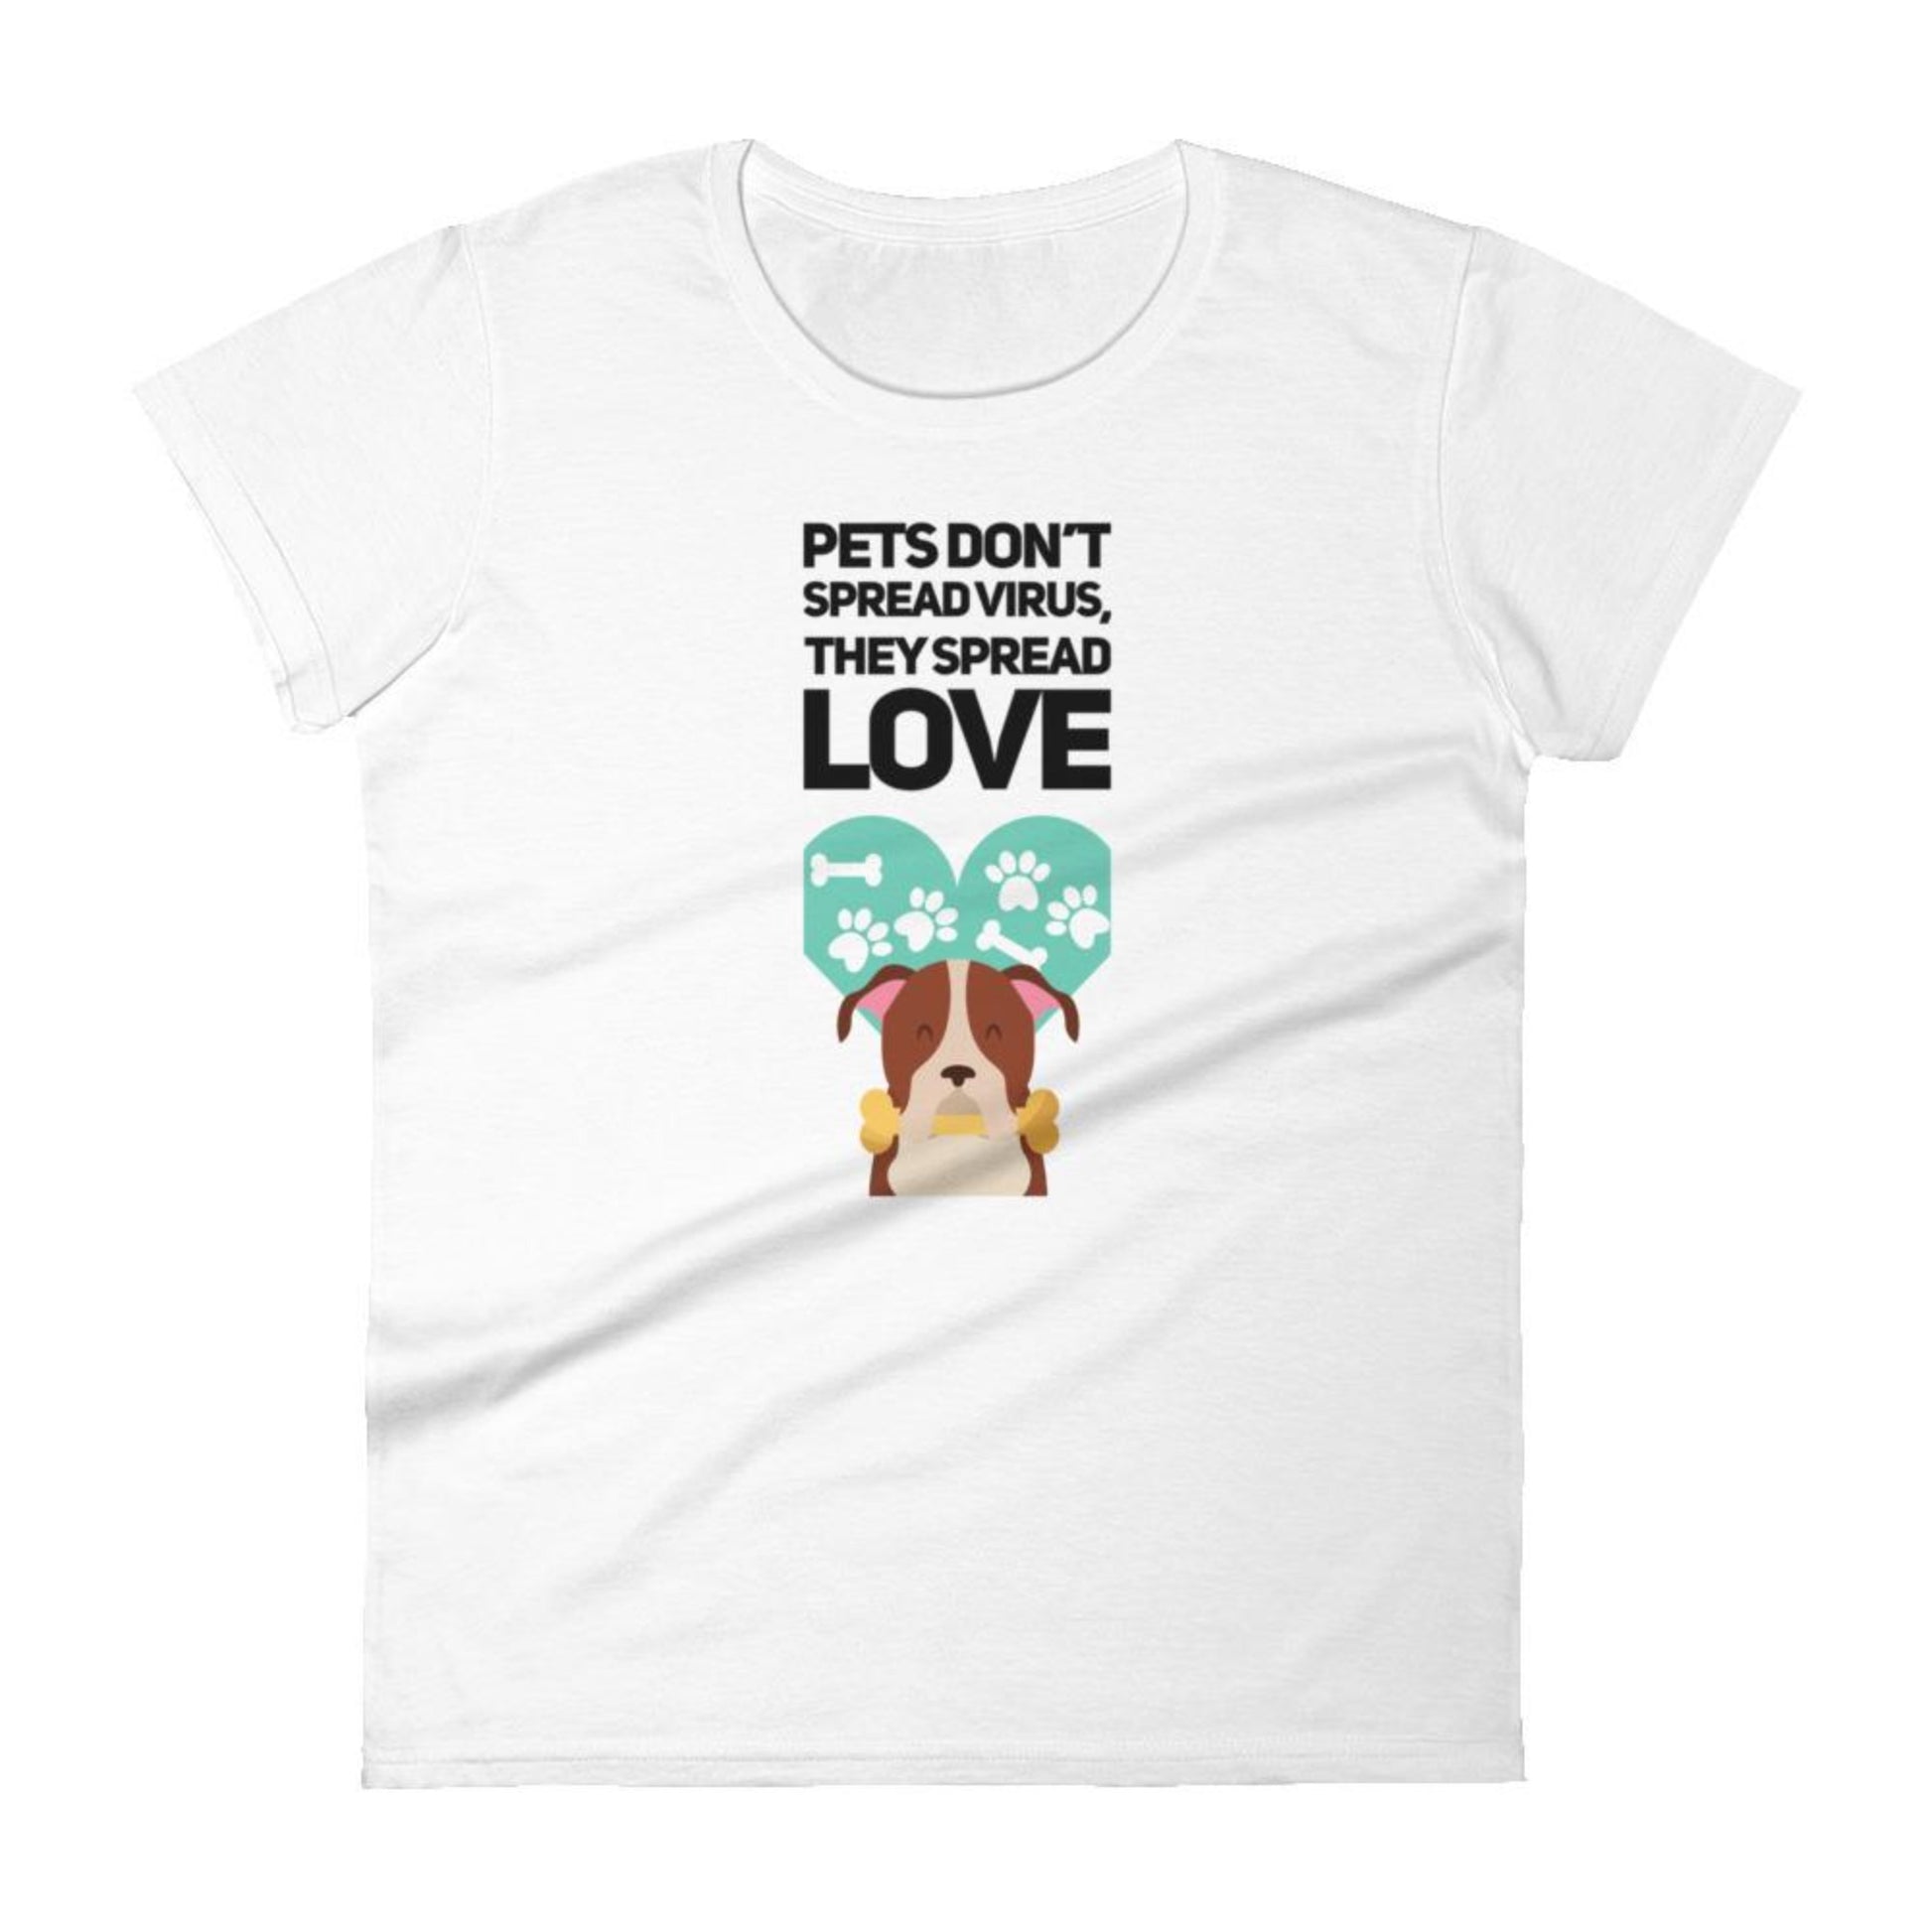 Pets Spread Love on Women's Short Sleeve T-shirt, Dog Mom Shirt, White